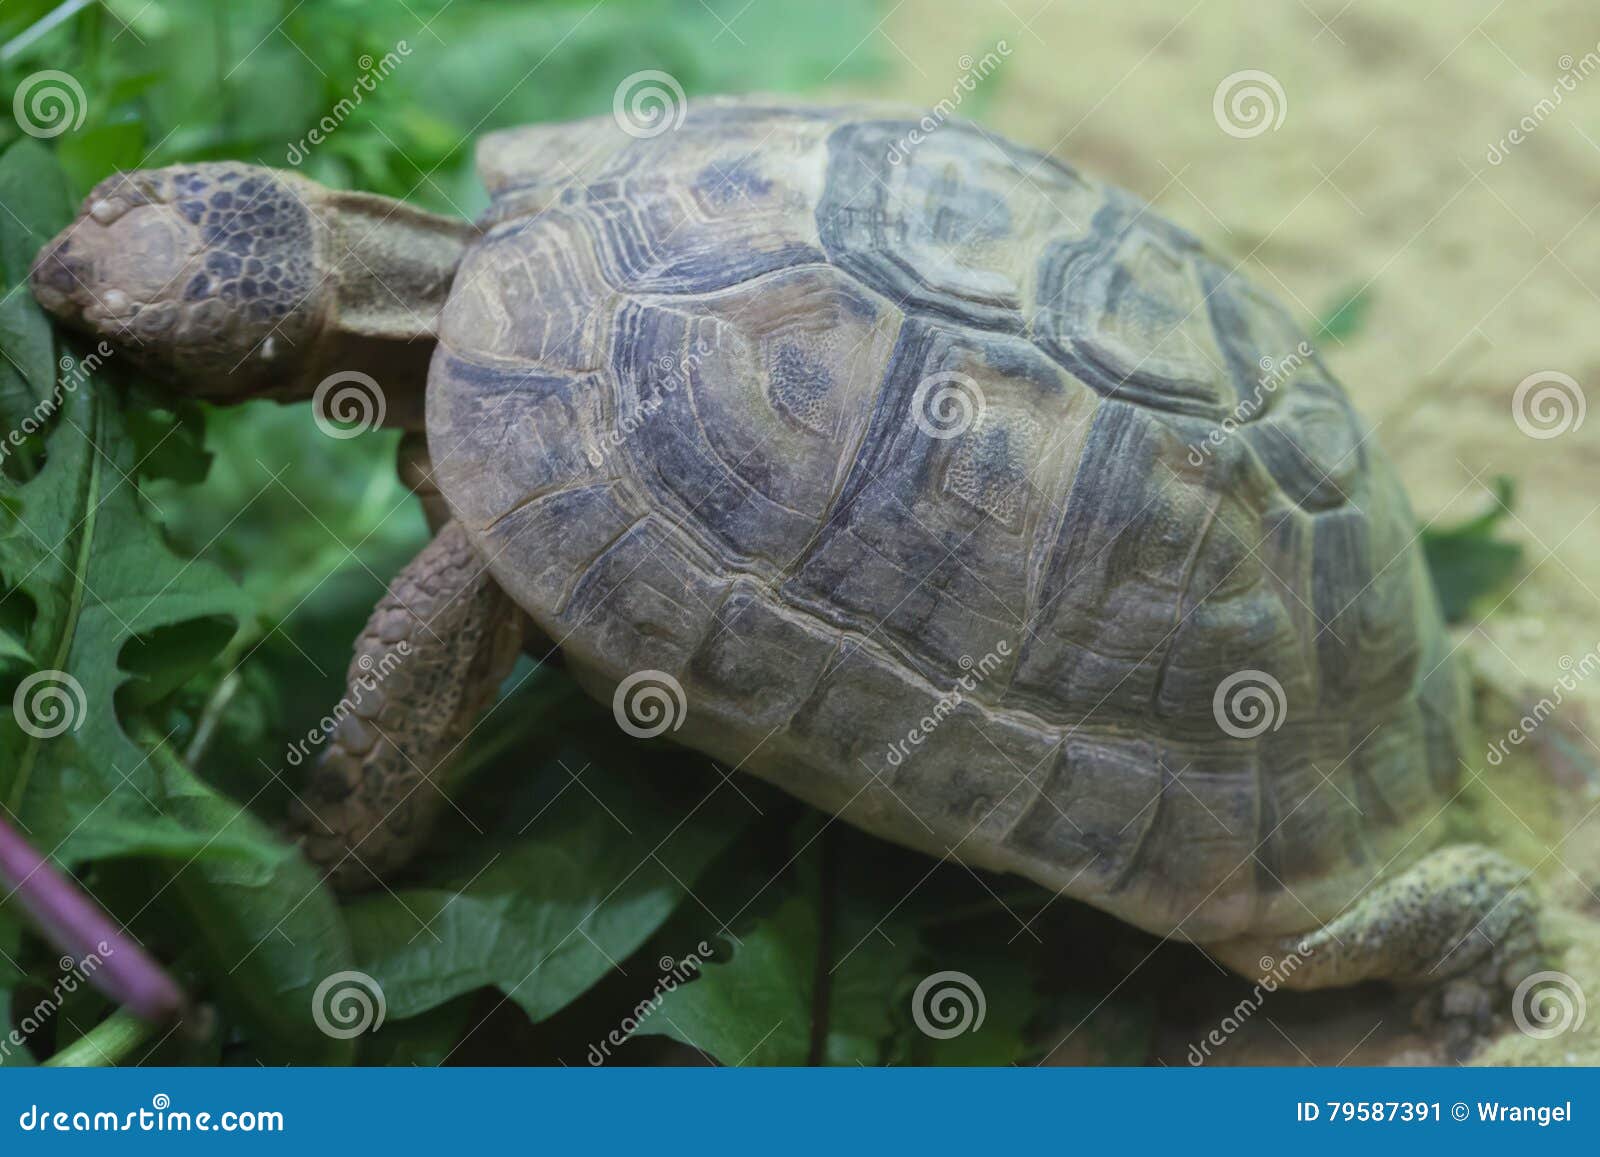 Turtle на русский. Русская черепаха. Agrionemys horsfieldii. T. horsfieldii horsfieldii. Asia St 71 x Turtles.